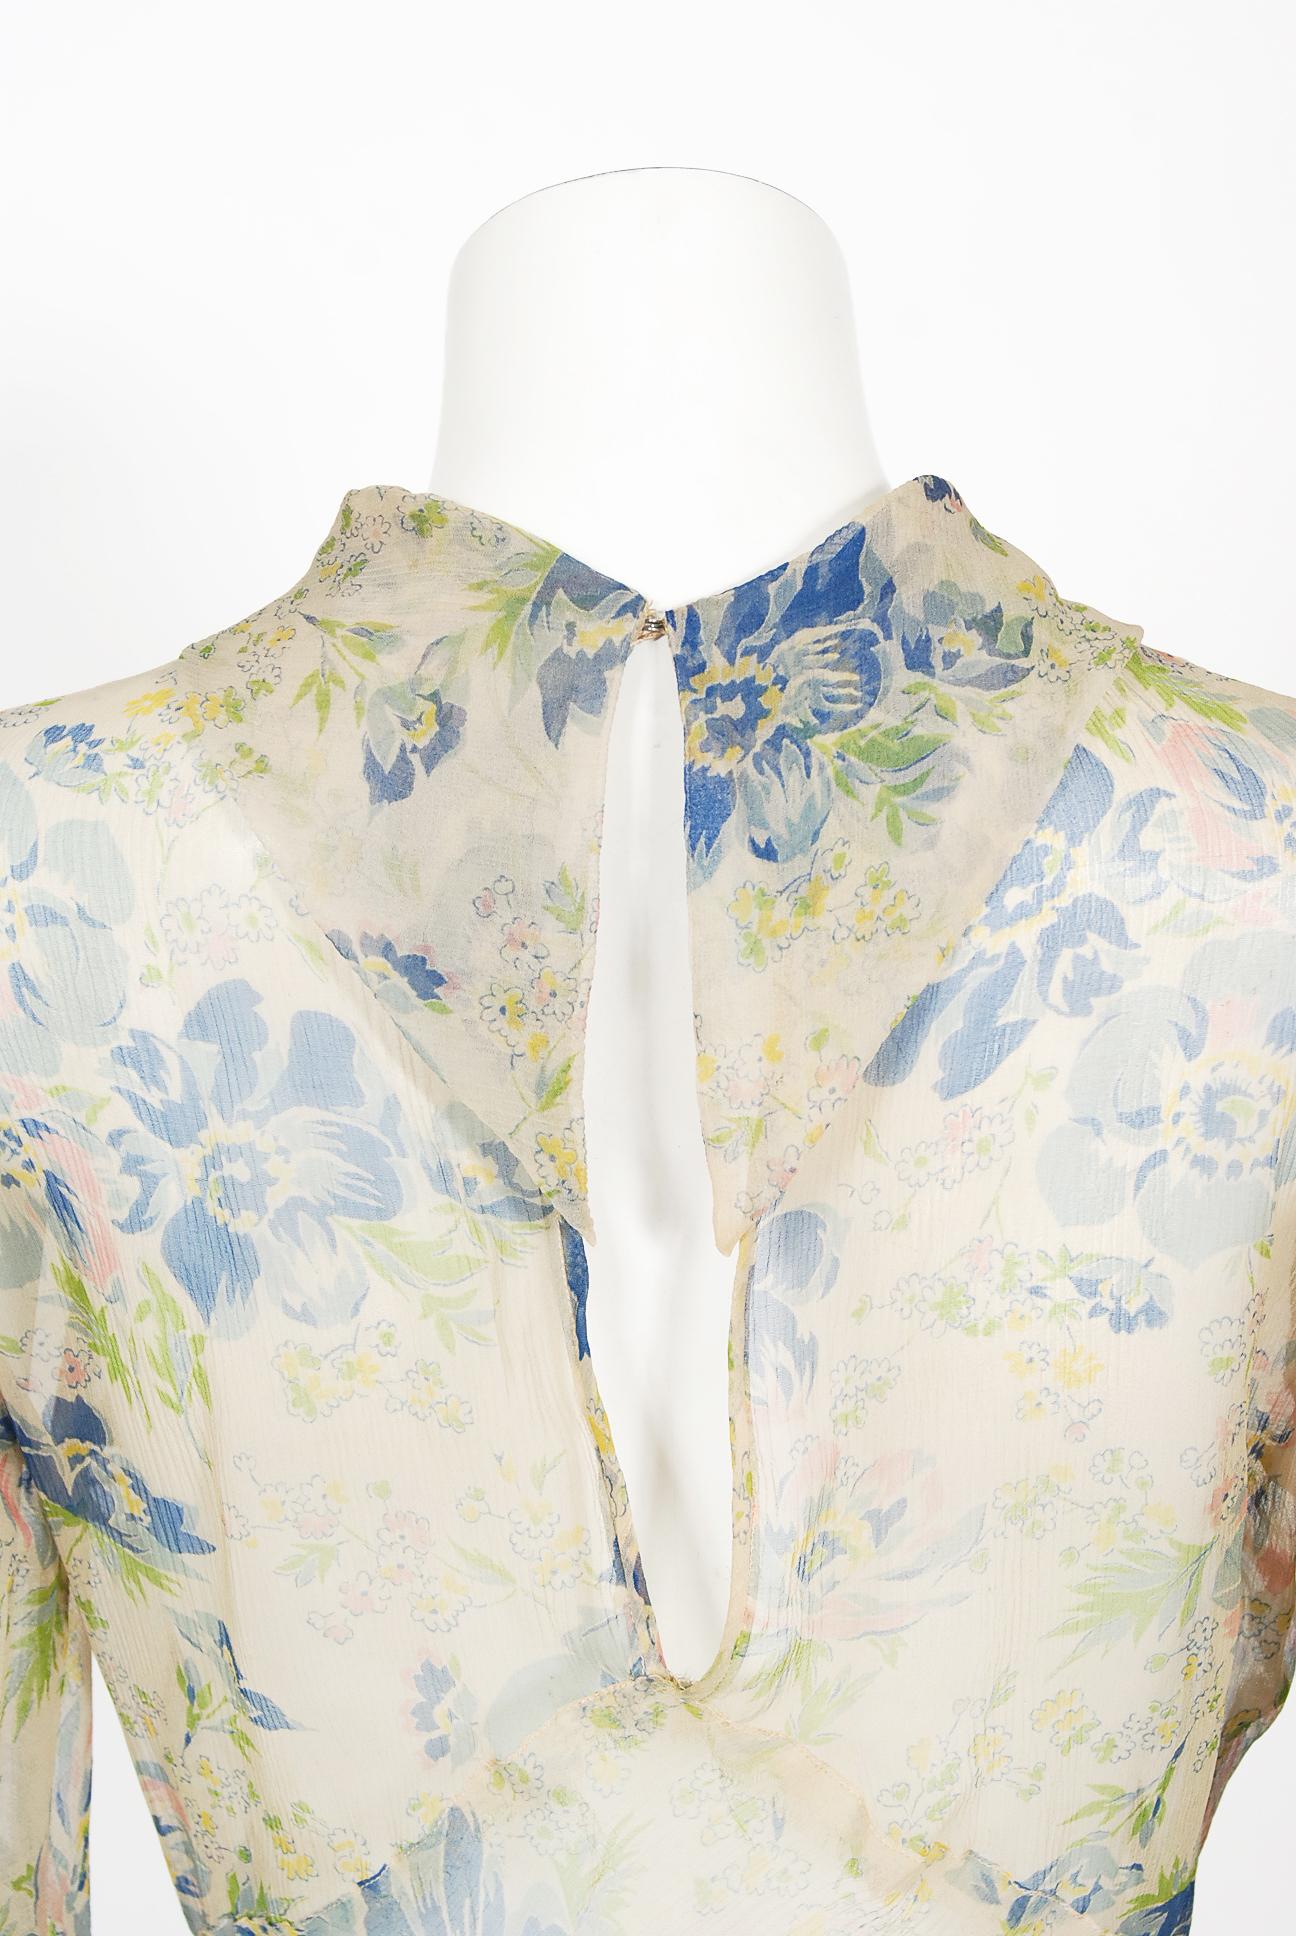 Vintage 1930's Sheer Floral Print Chiffon Pintuck Billow-Sleeve Bias Cut Gown 9